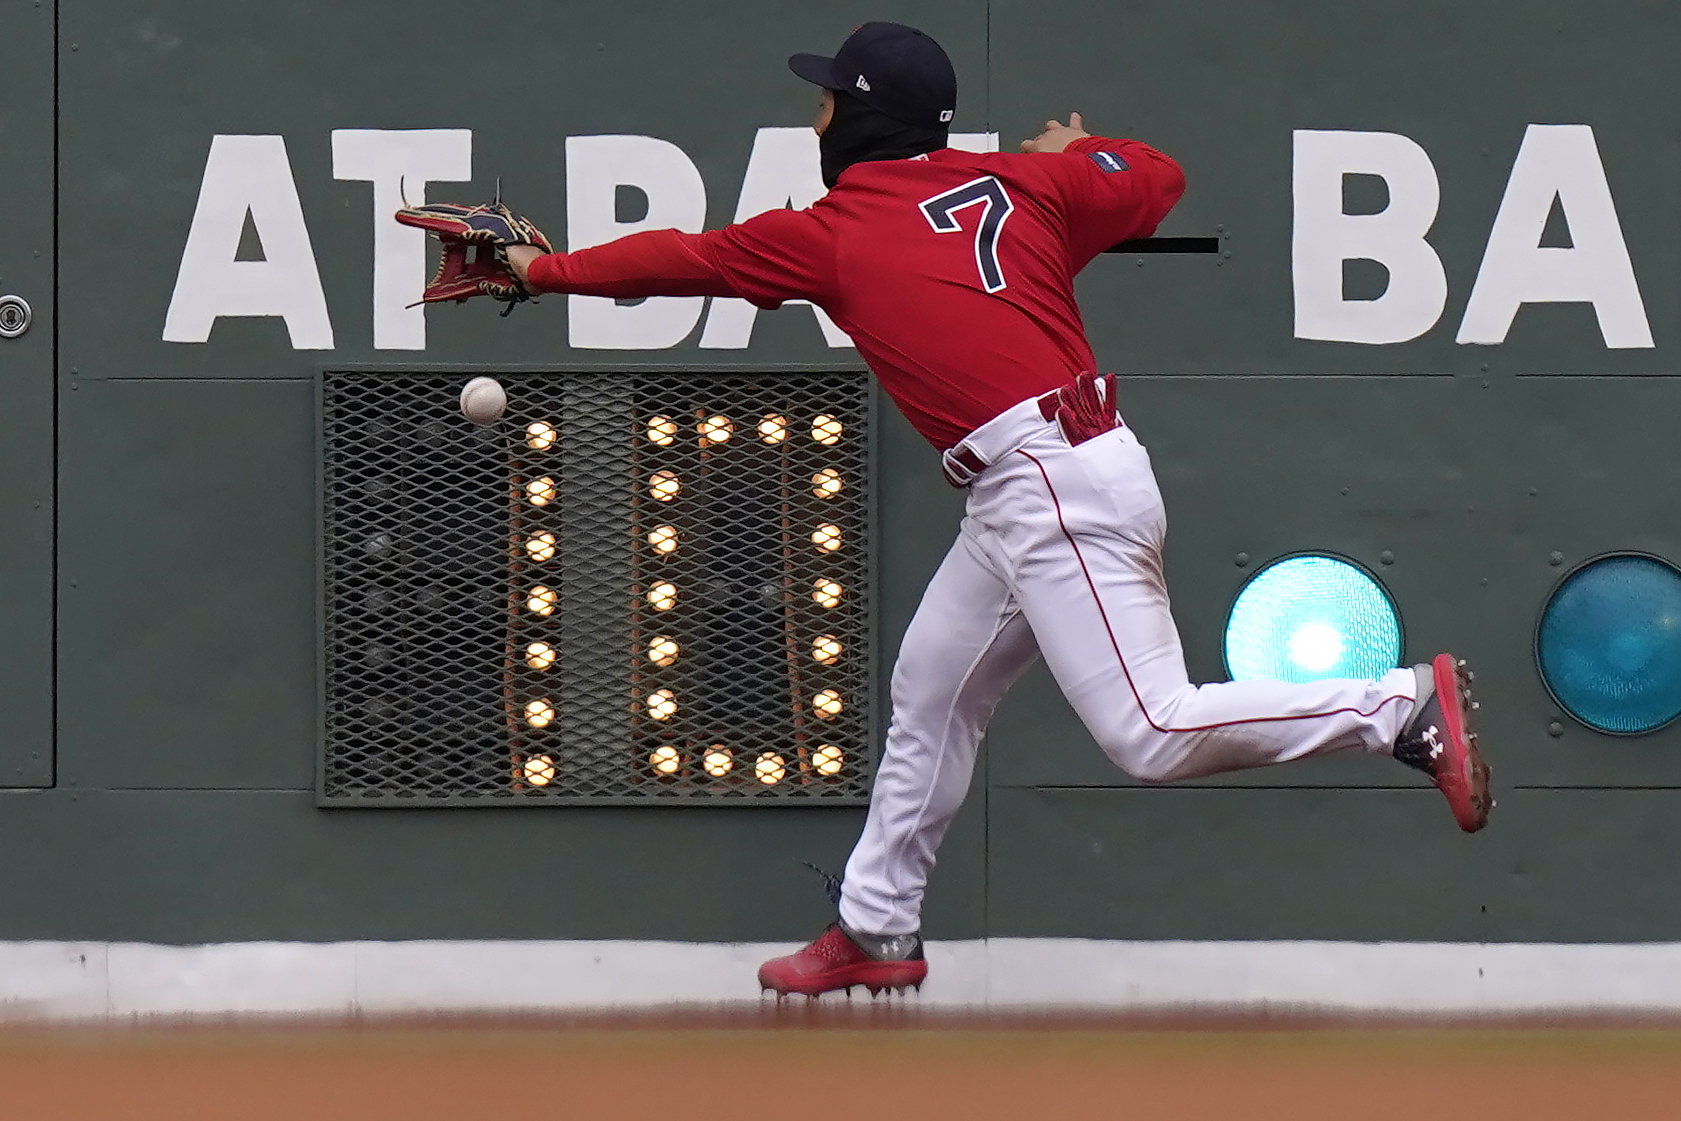 Boston Red Sox' Masataka Yoshida Wins American League Award - Fastball